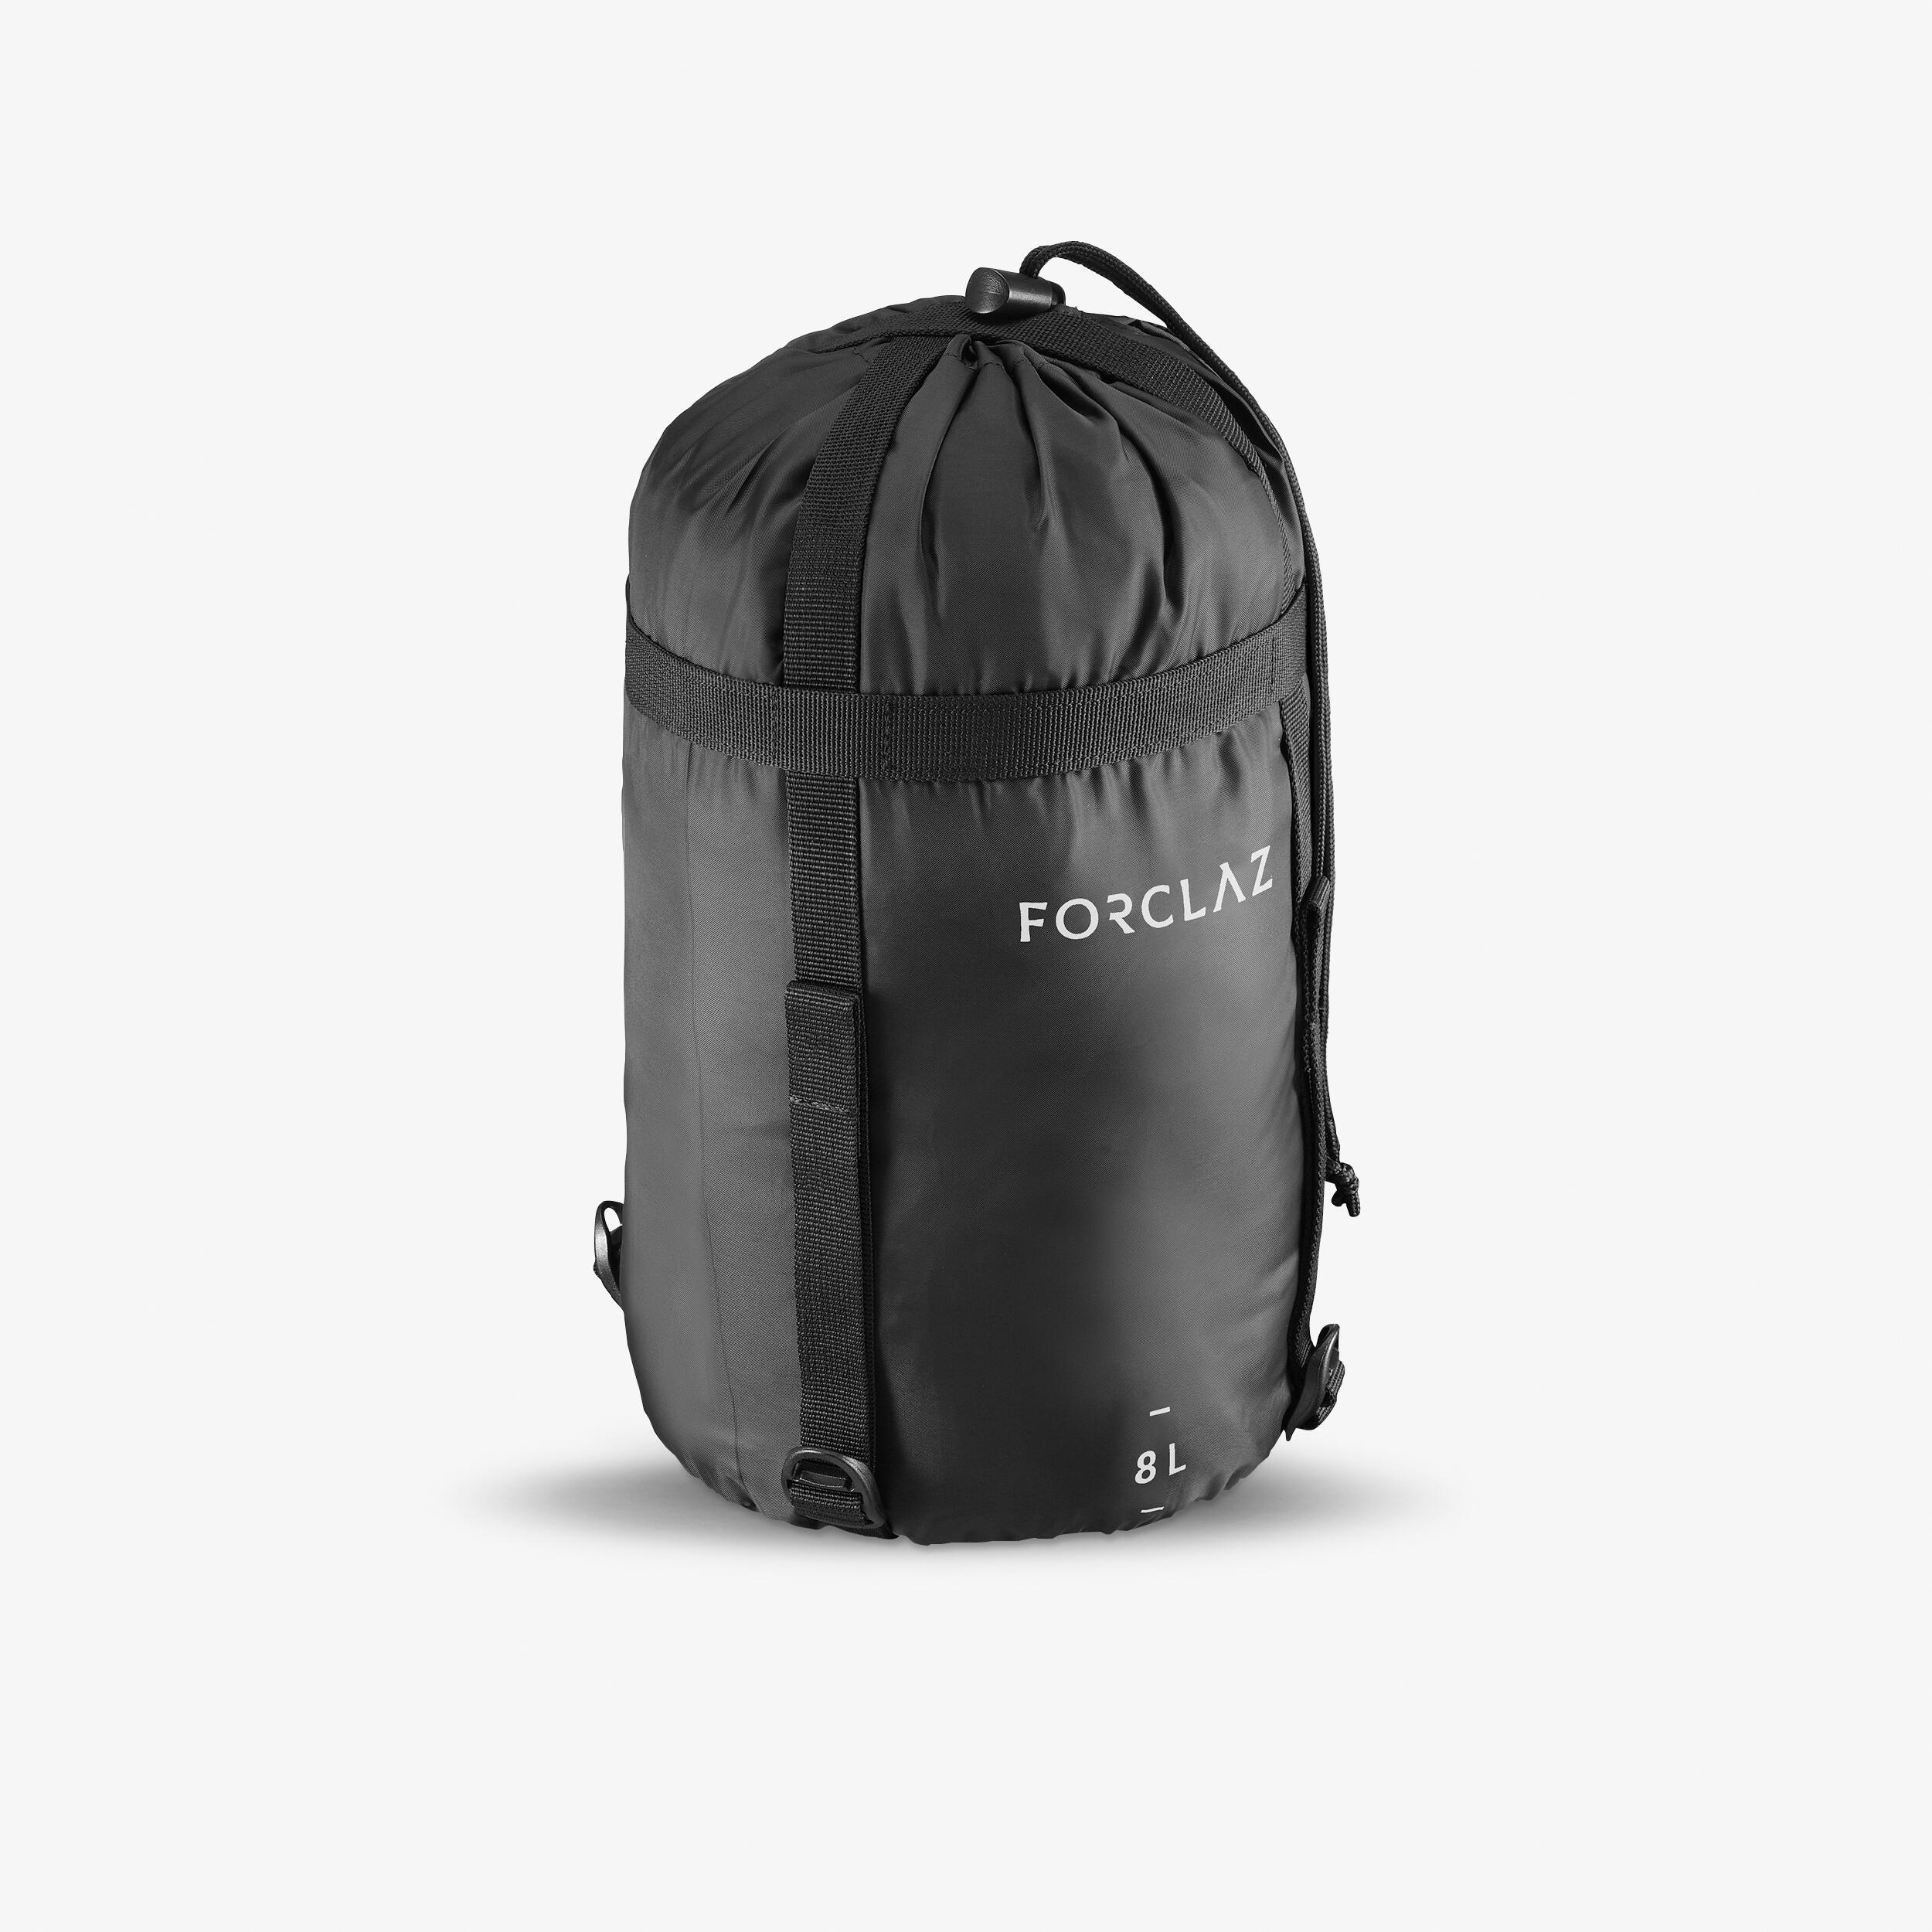 FORCLAZ Sleeping bag compression cover - MT500 - 8L